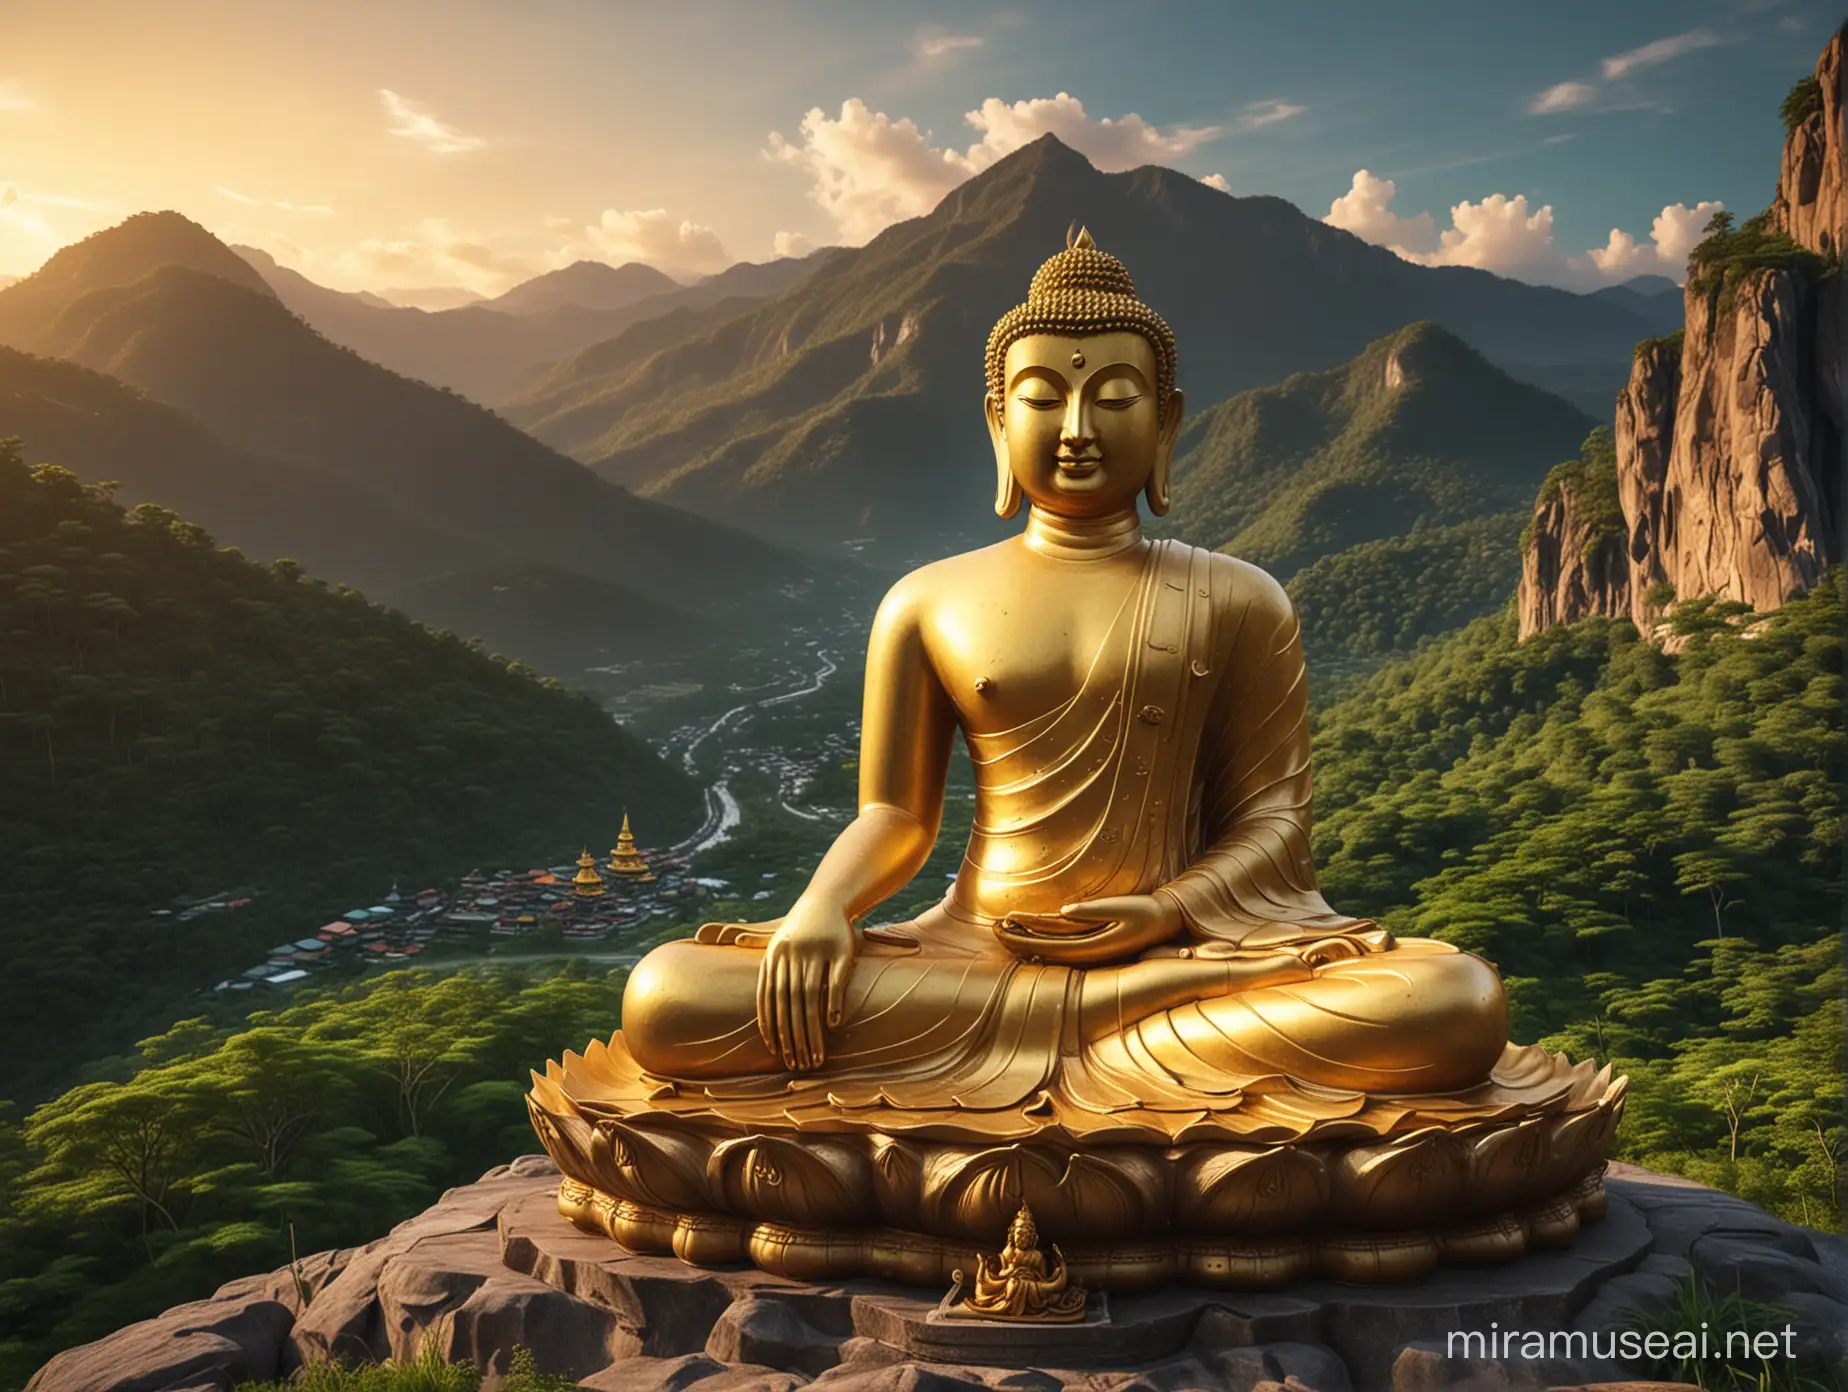 Majestic Golden Buddha Meditating atop Verdant Mountain Serene Fantasy Landscape in 4K